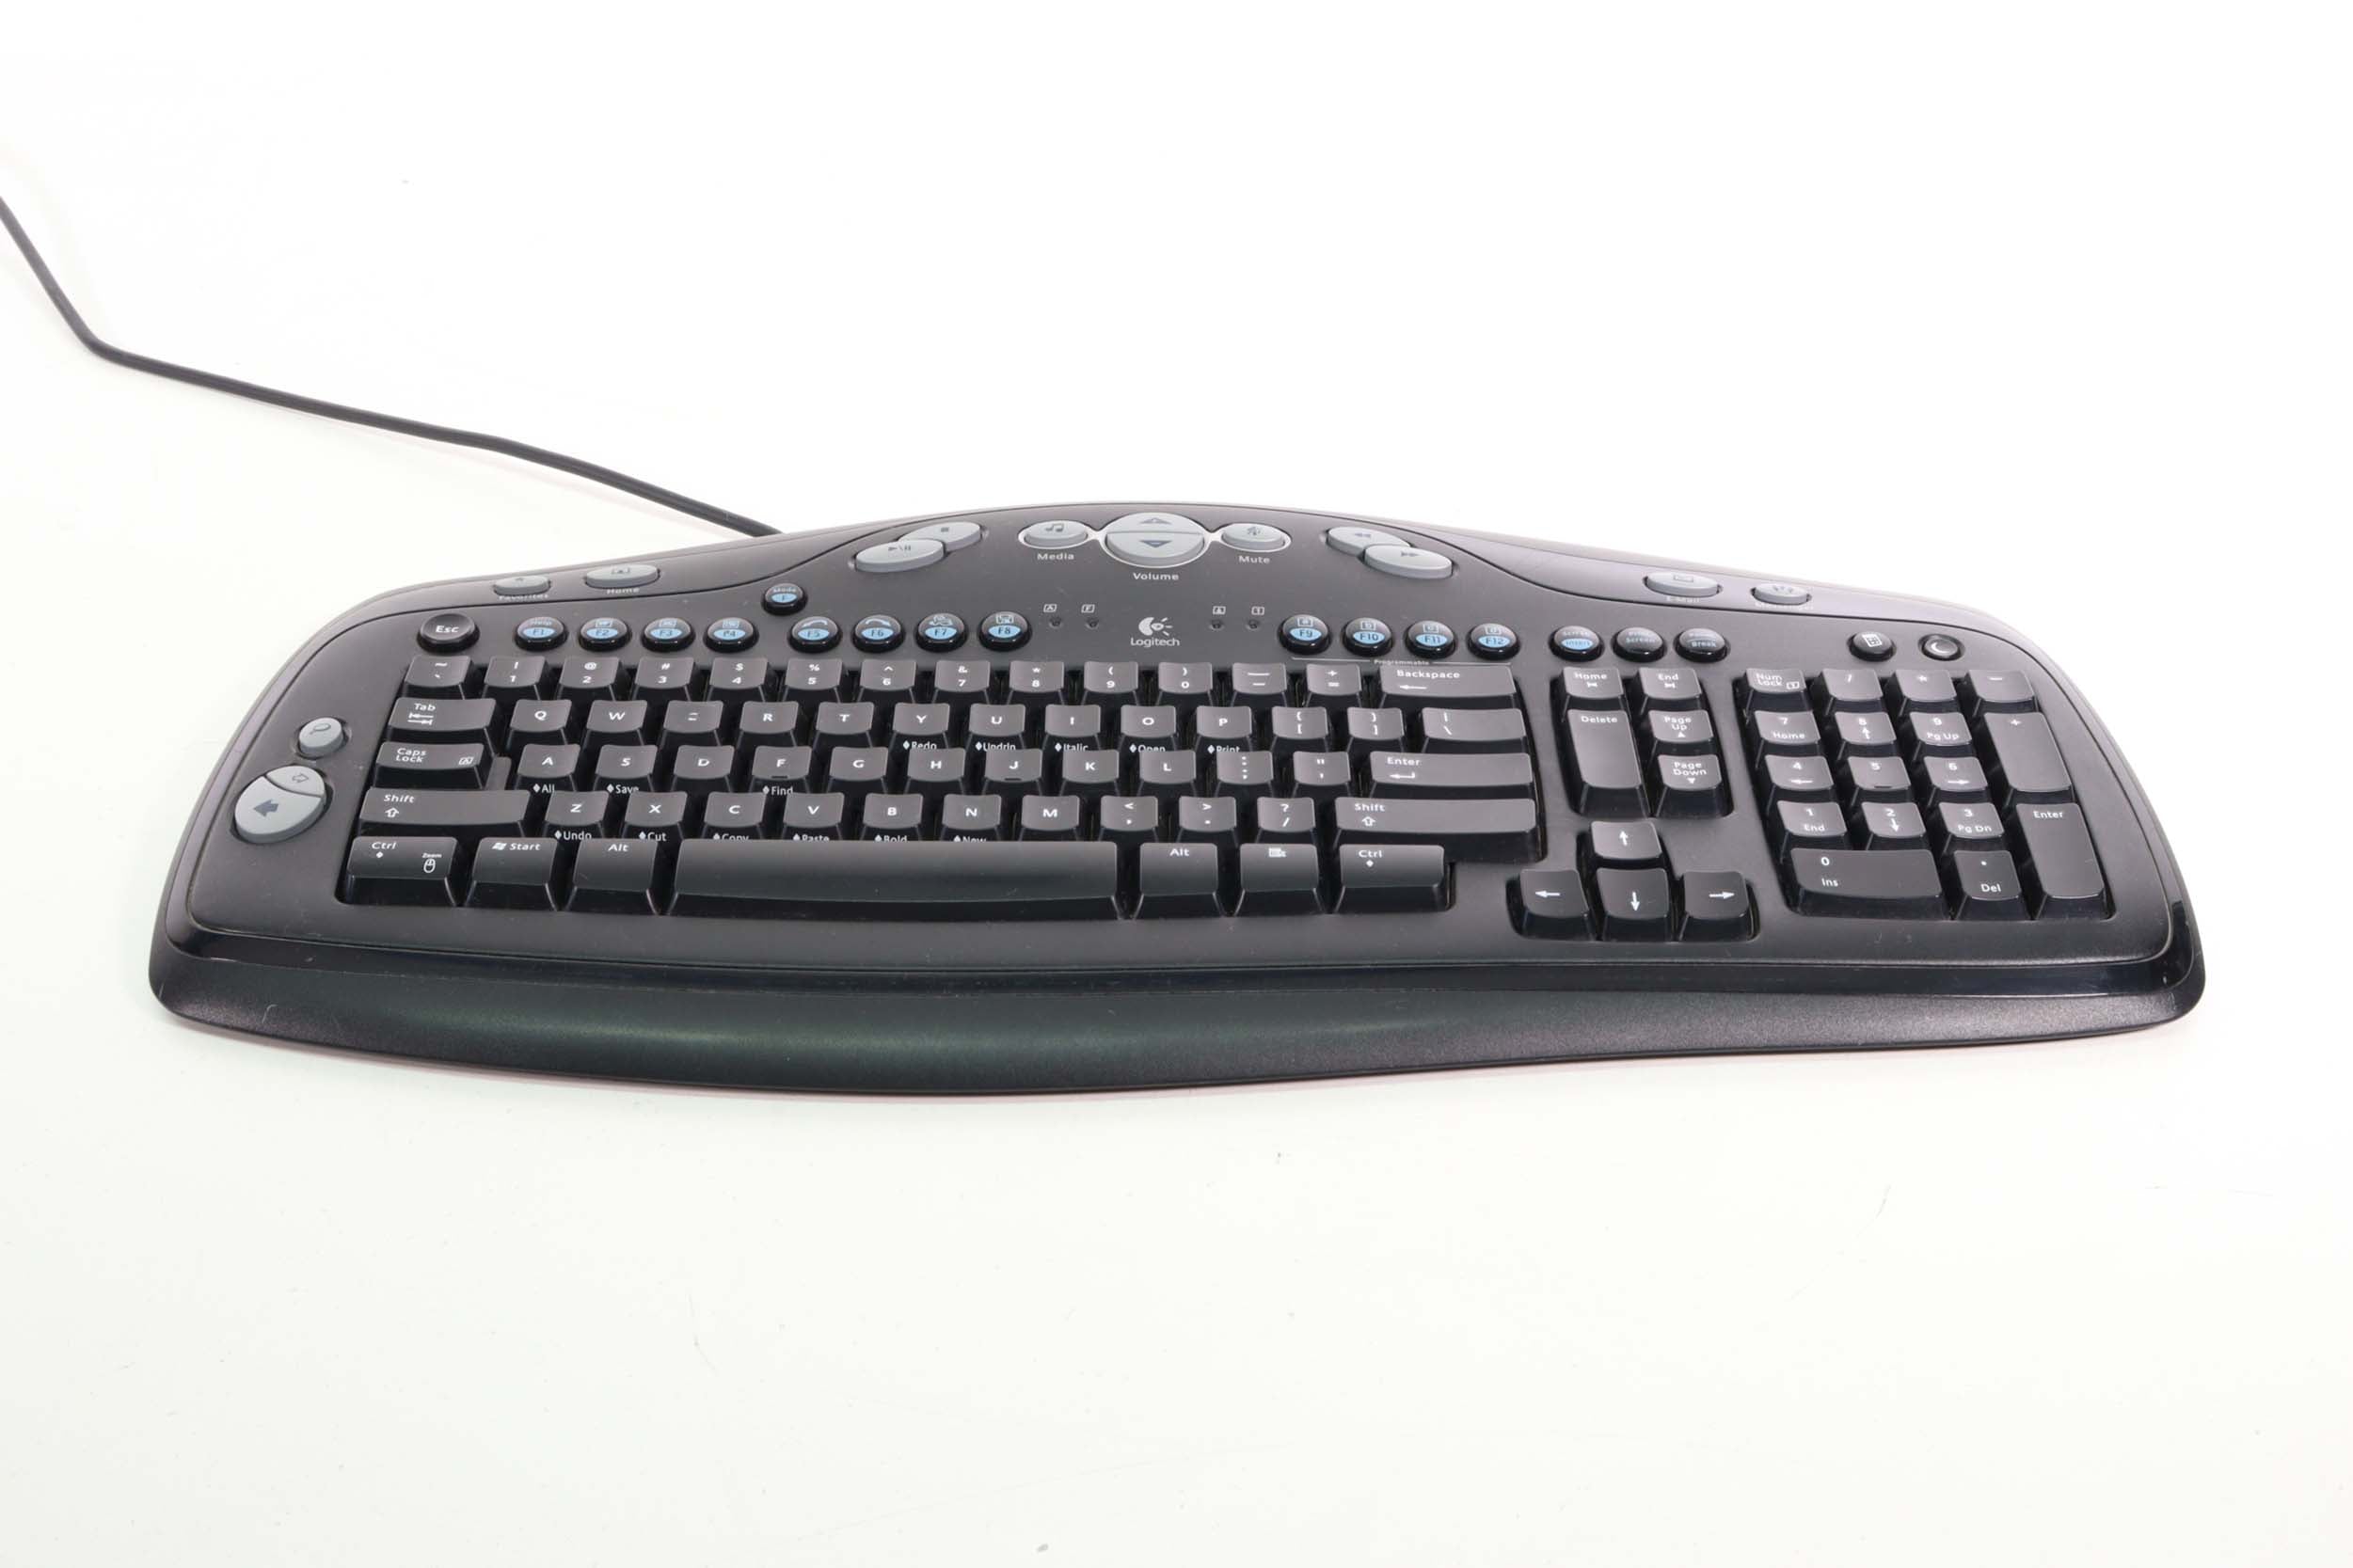 Logitech PC Gaming Keyboards in Computer Keyboards 